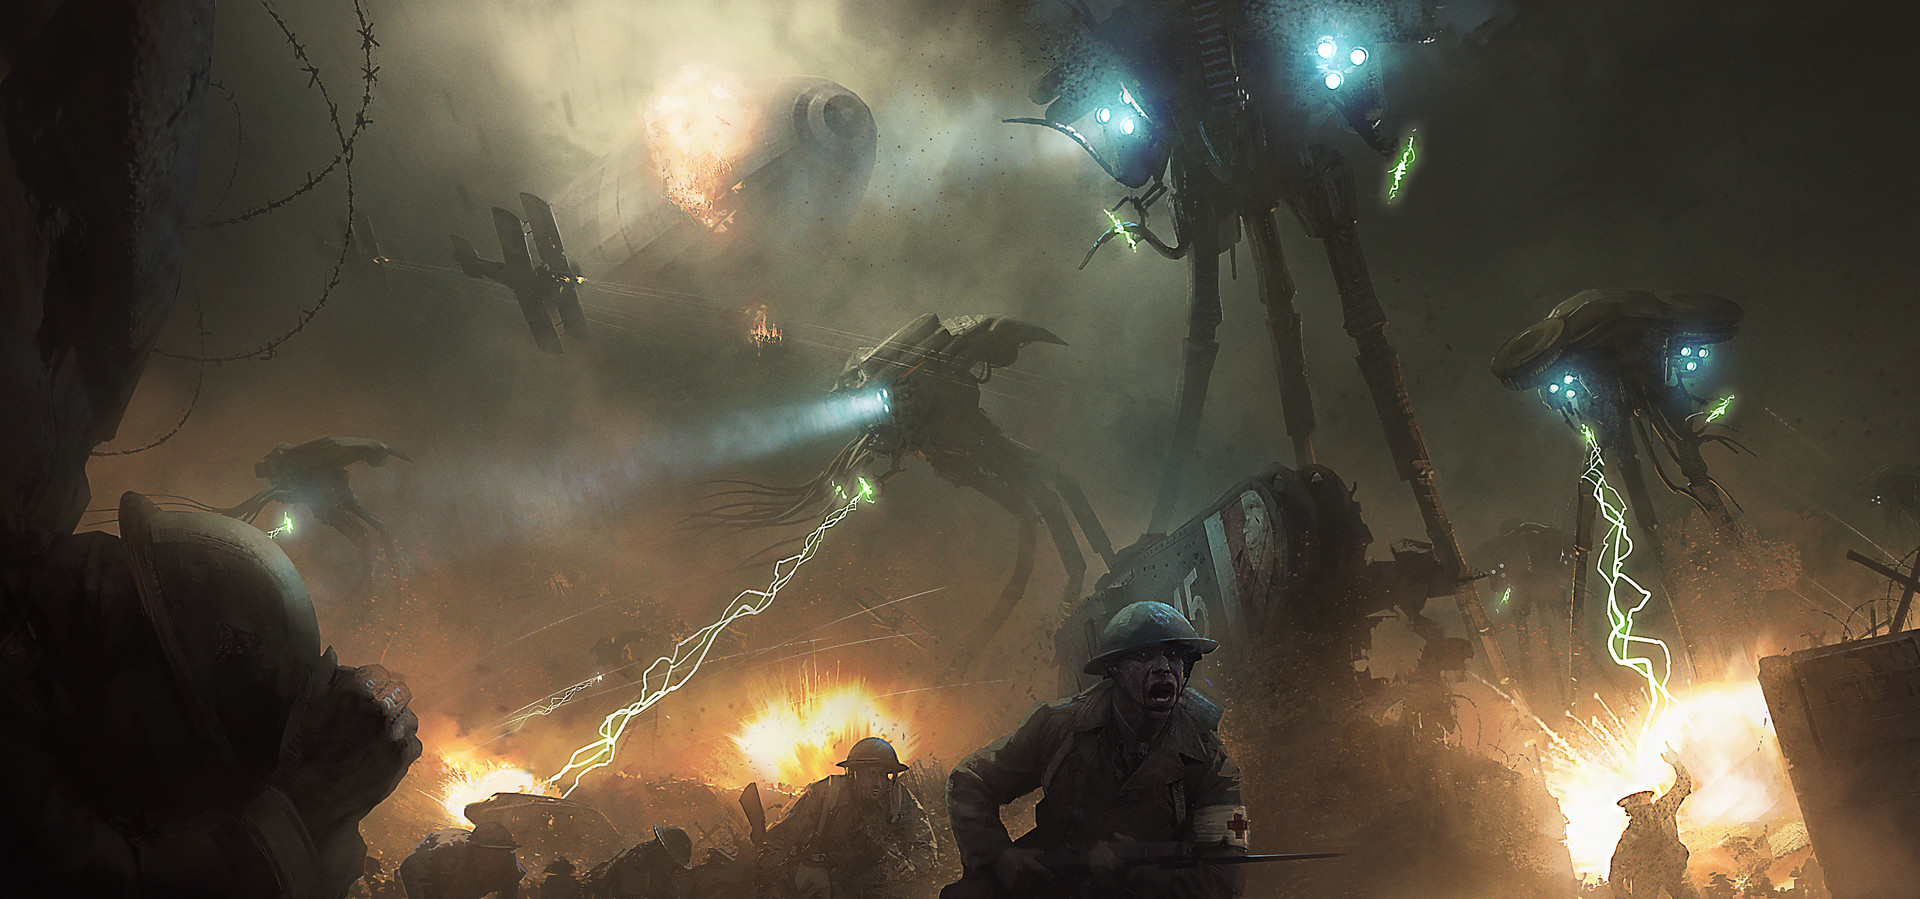 General 1920x899 science fiction high tech aliens War of the Worlds biplane fire smoke xenos war tripods